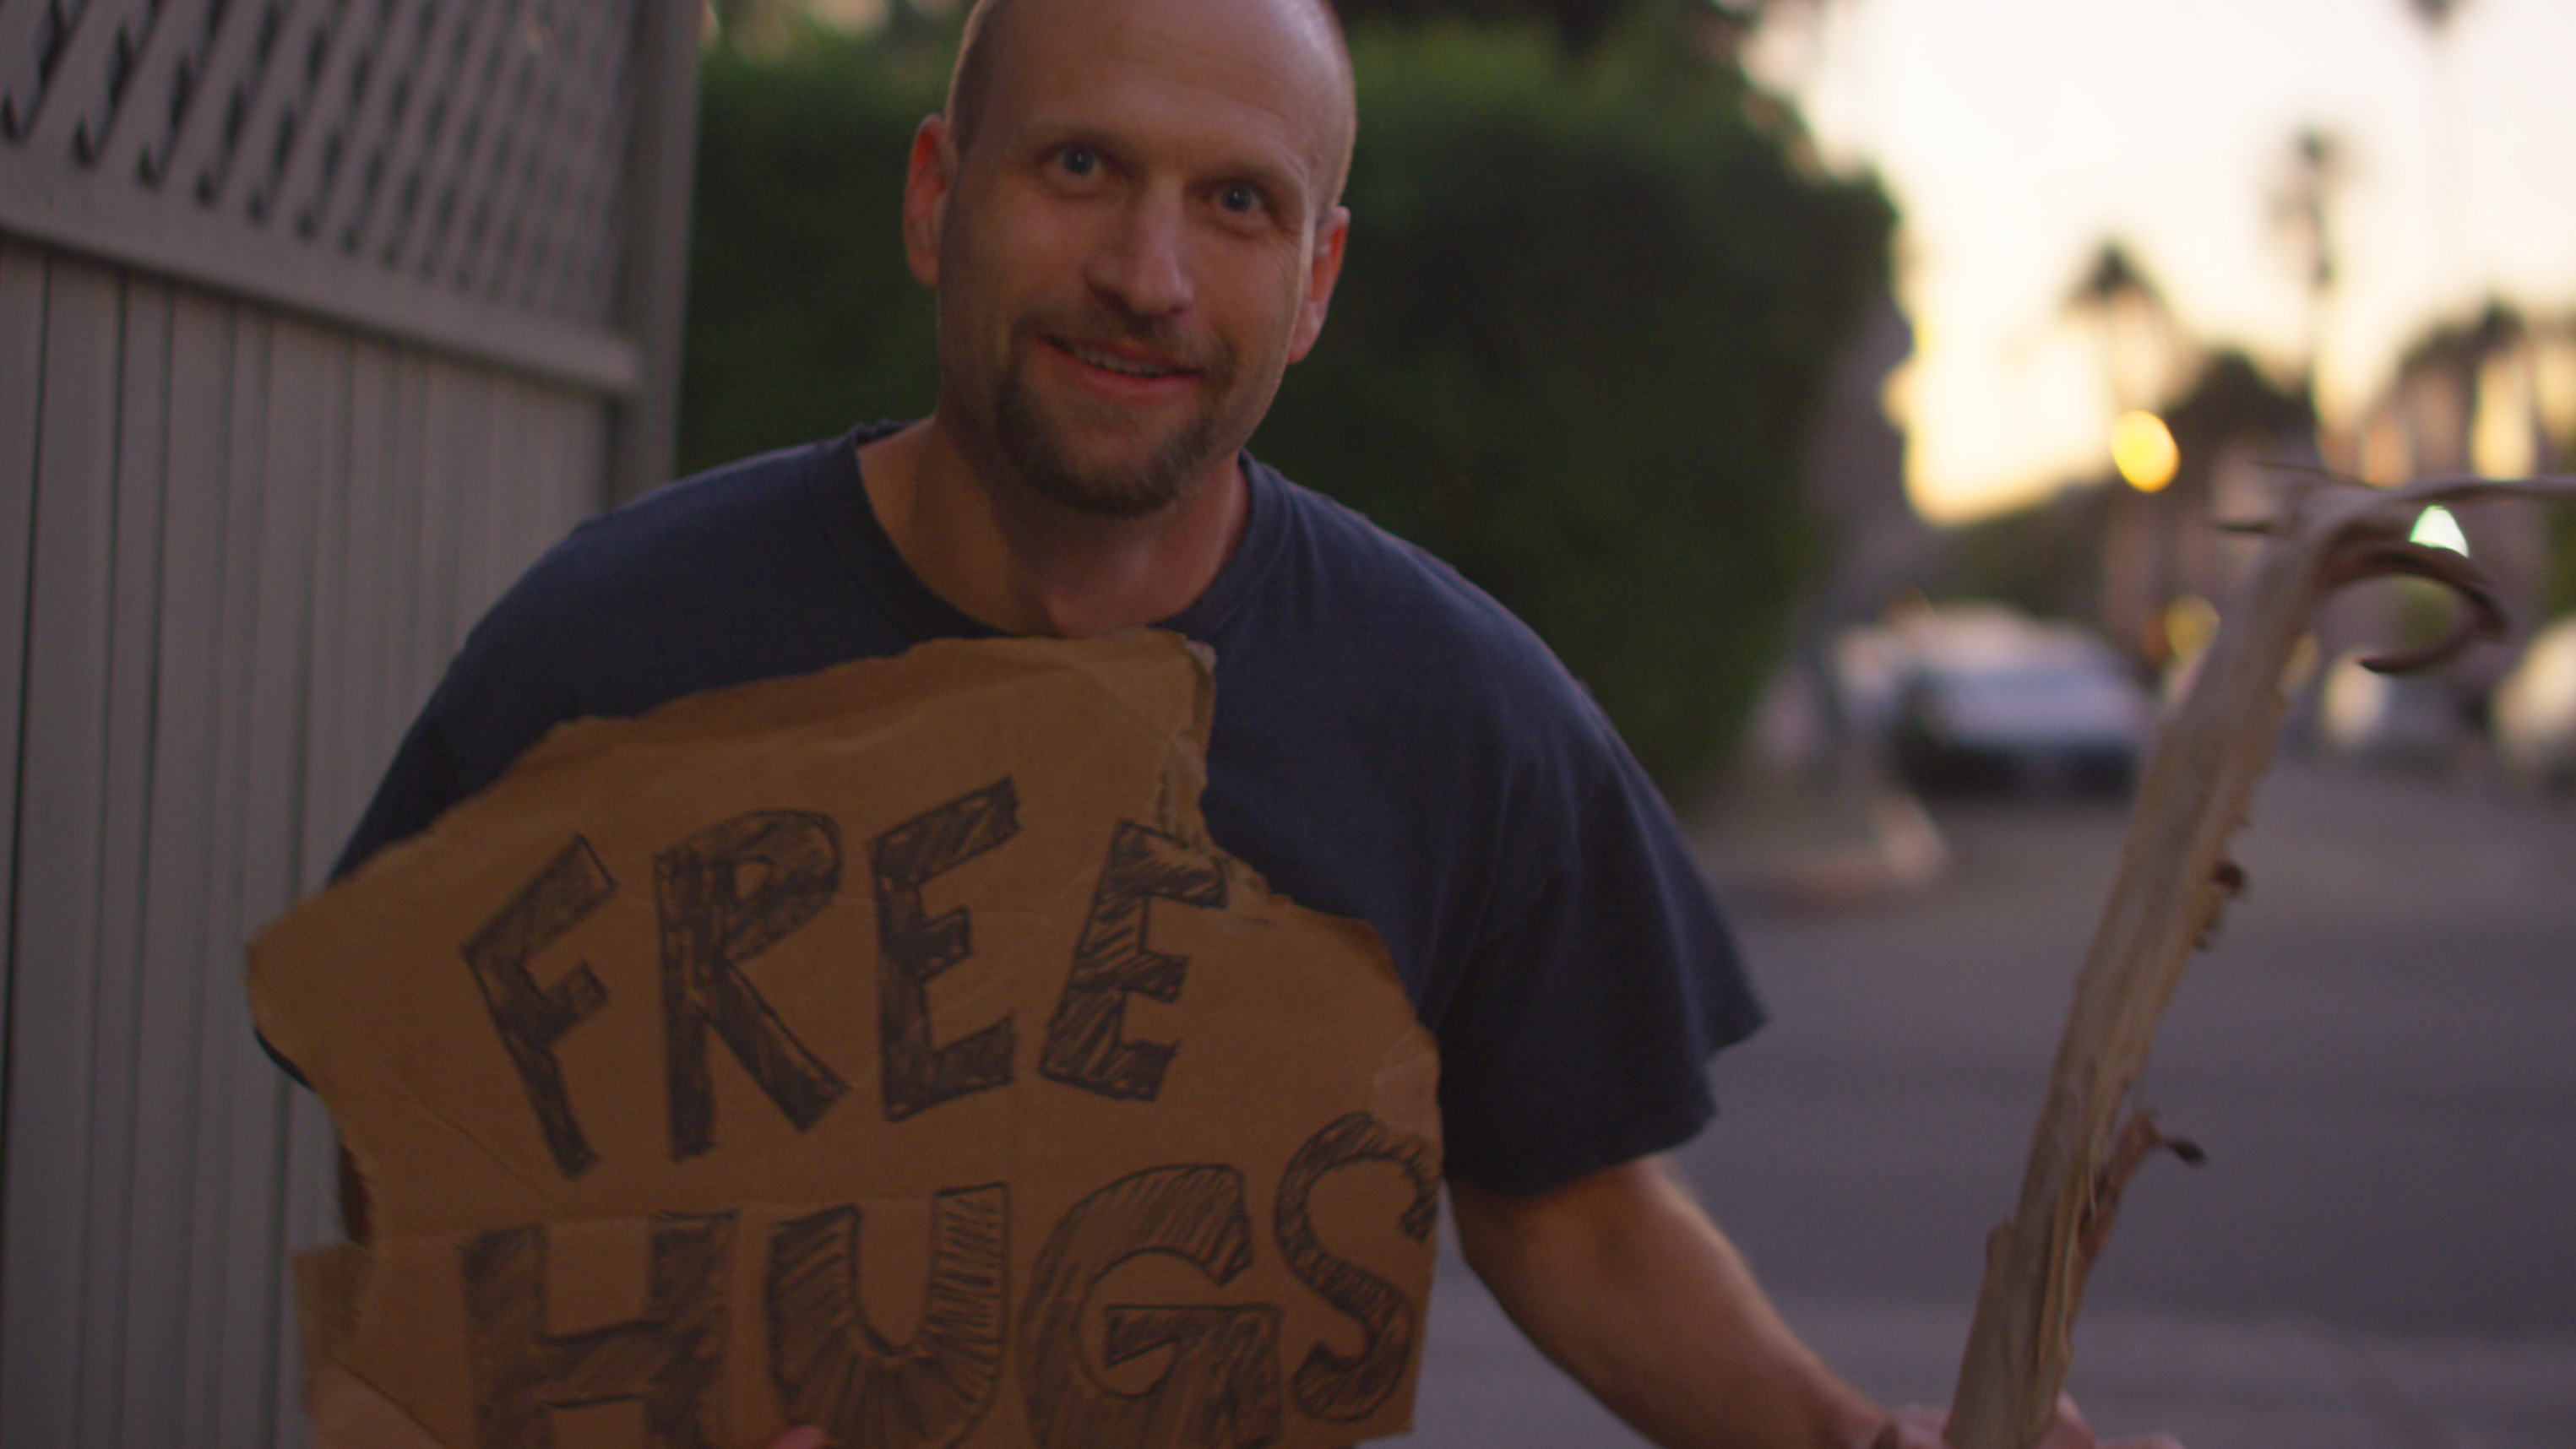 Free Hugs Guy